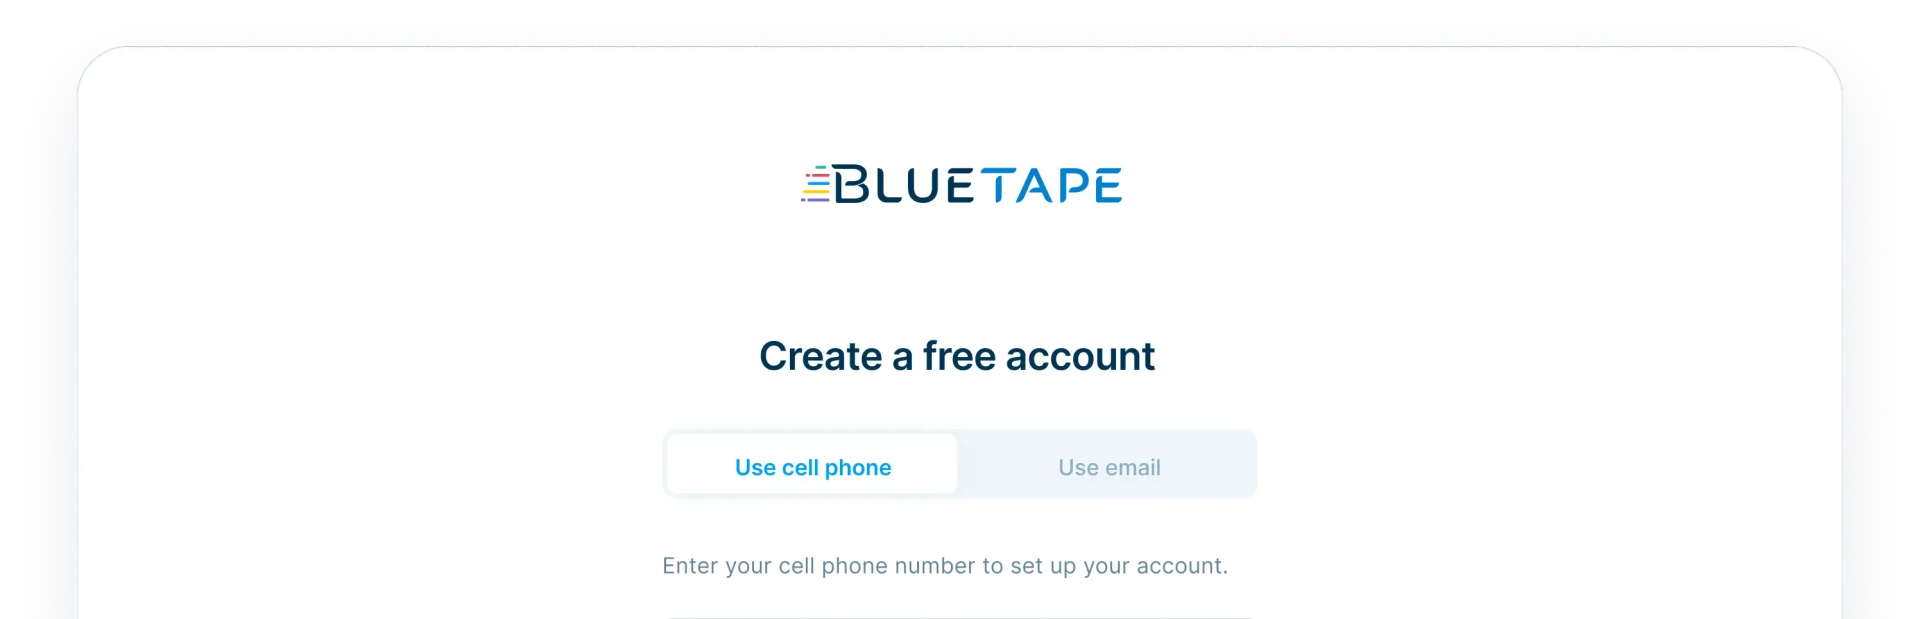 BlueTape login page